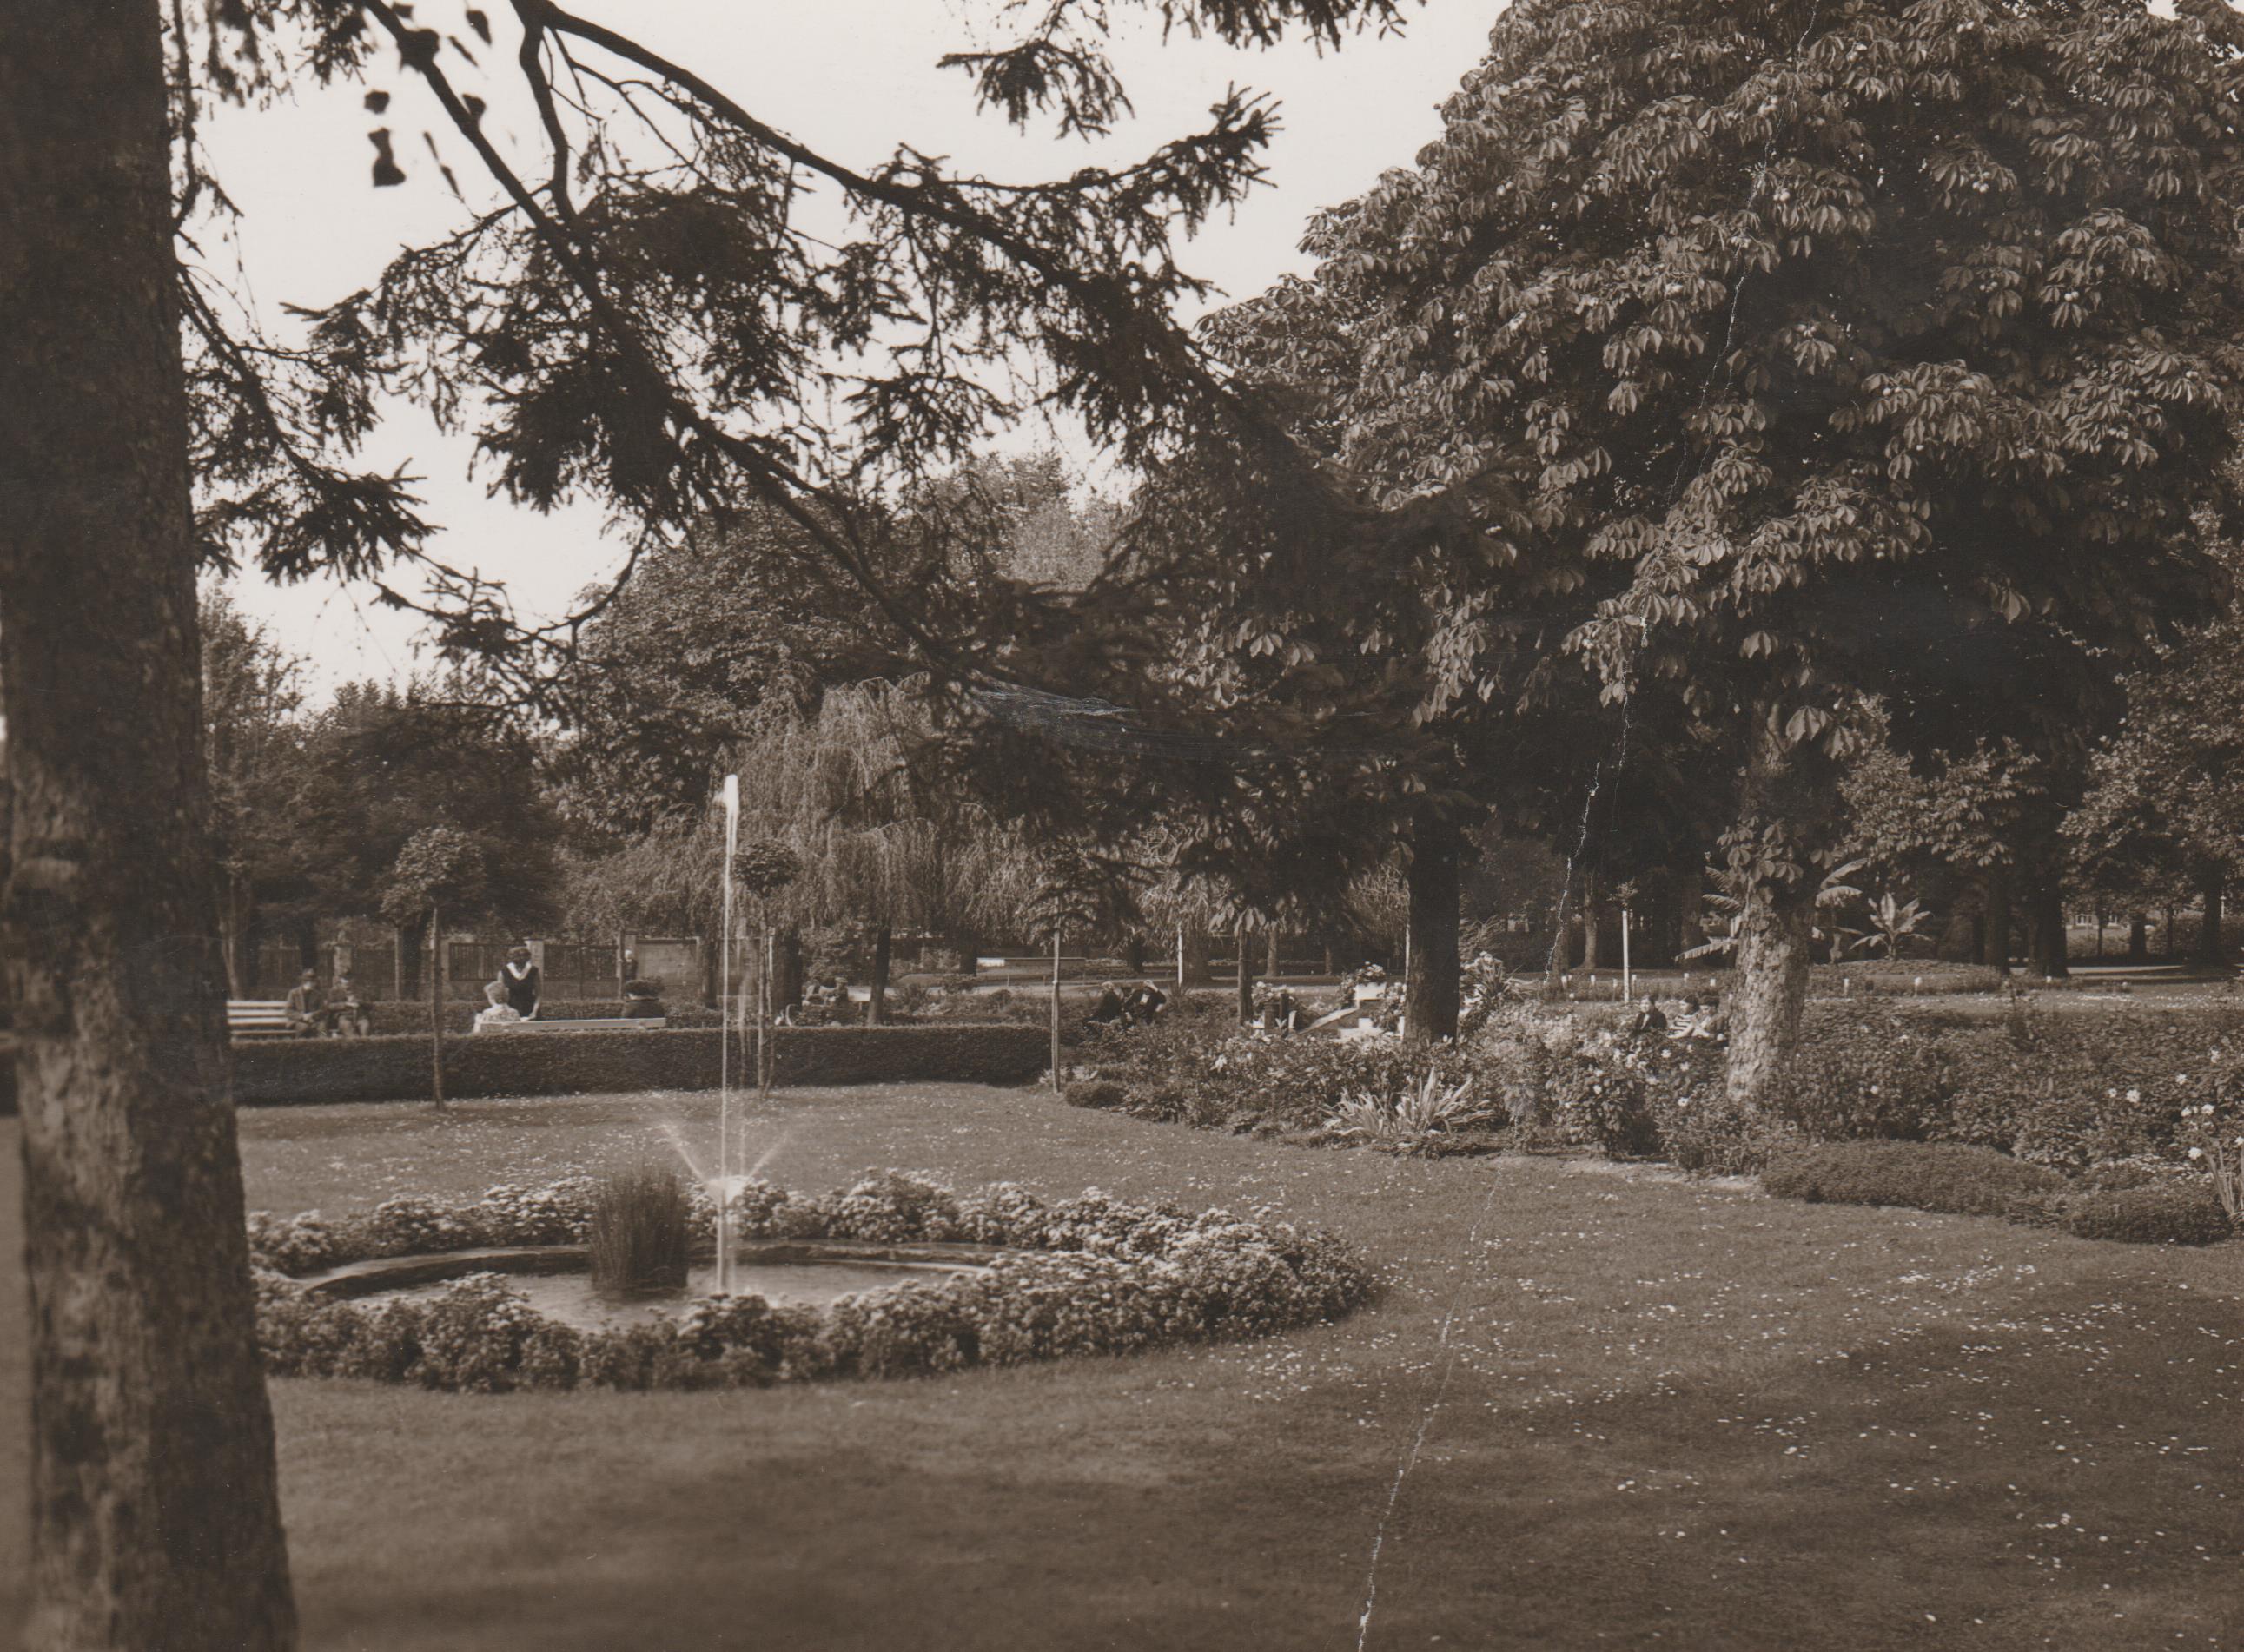 Springbrunnen im Stadtpark, Bendorf am Rhein 1950er Jahre (REM CC BY-NC-SA)